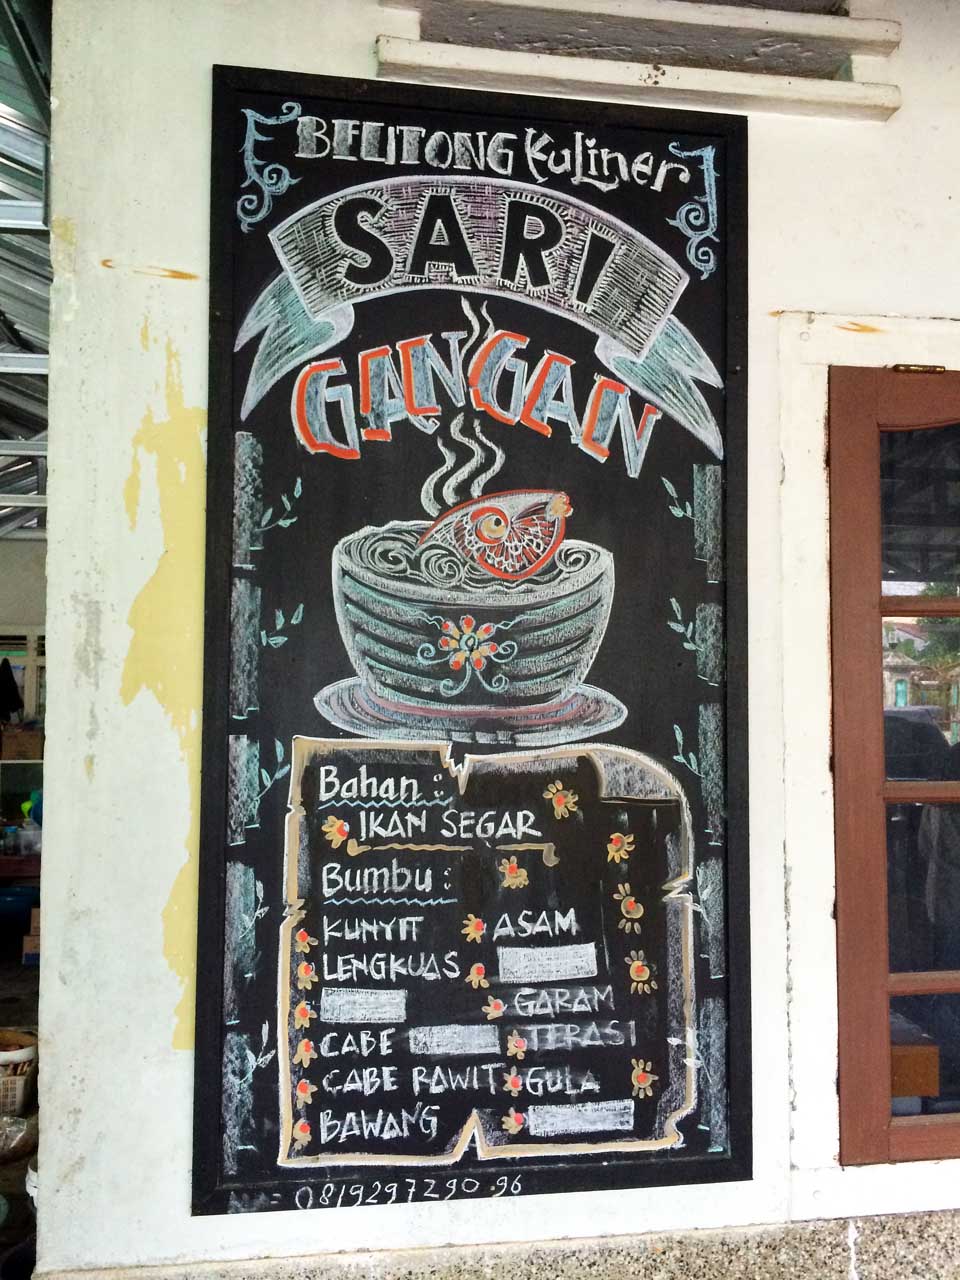 Sop Gangan - RM Sari Gangan - Kuliner Belitung - Yopie Pangkey - 2